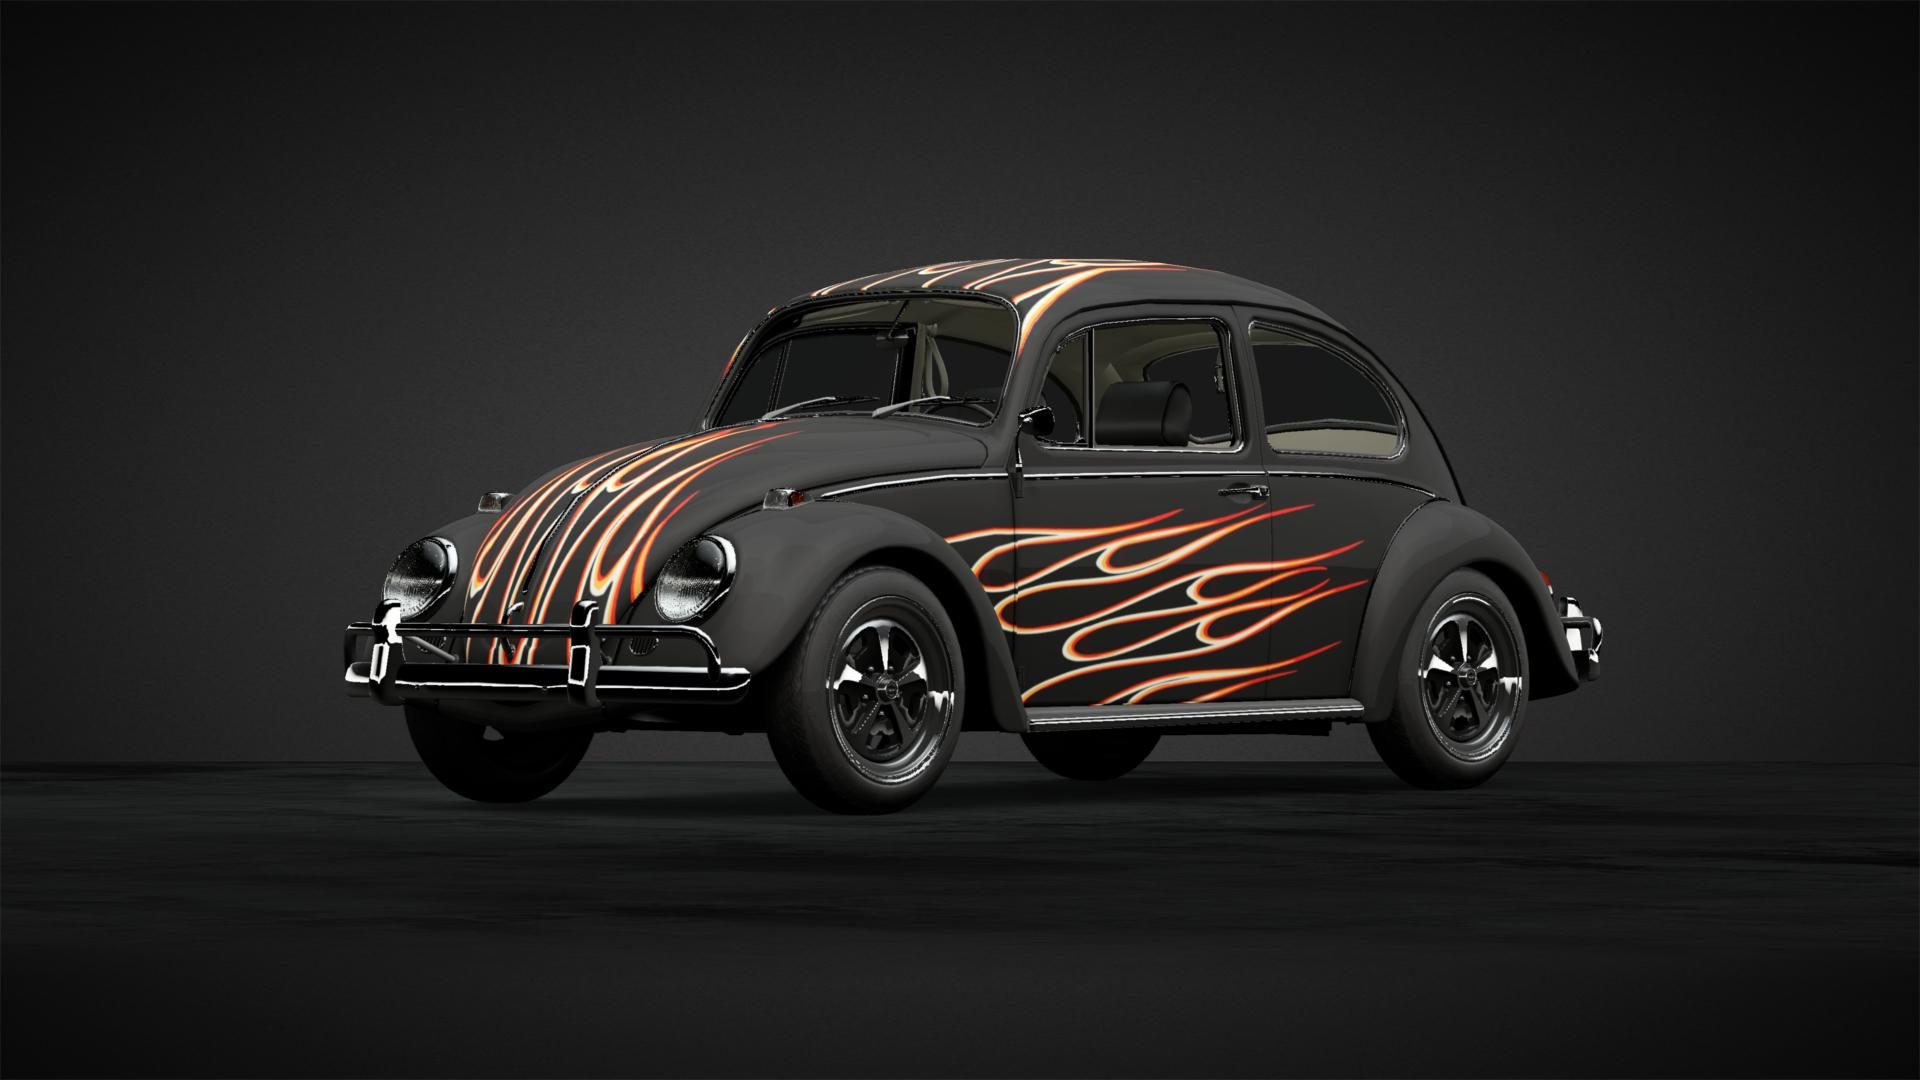 Hot Rod Beetle